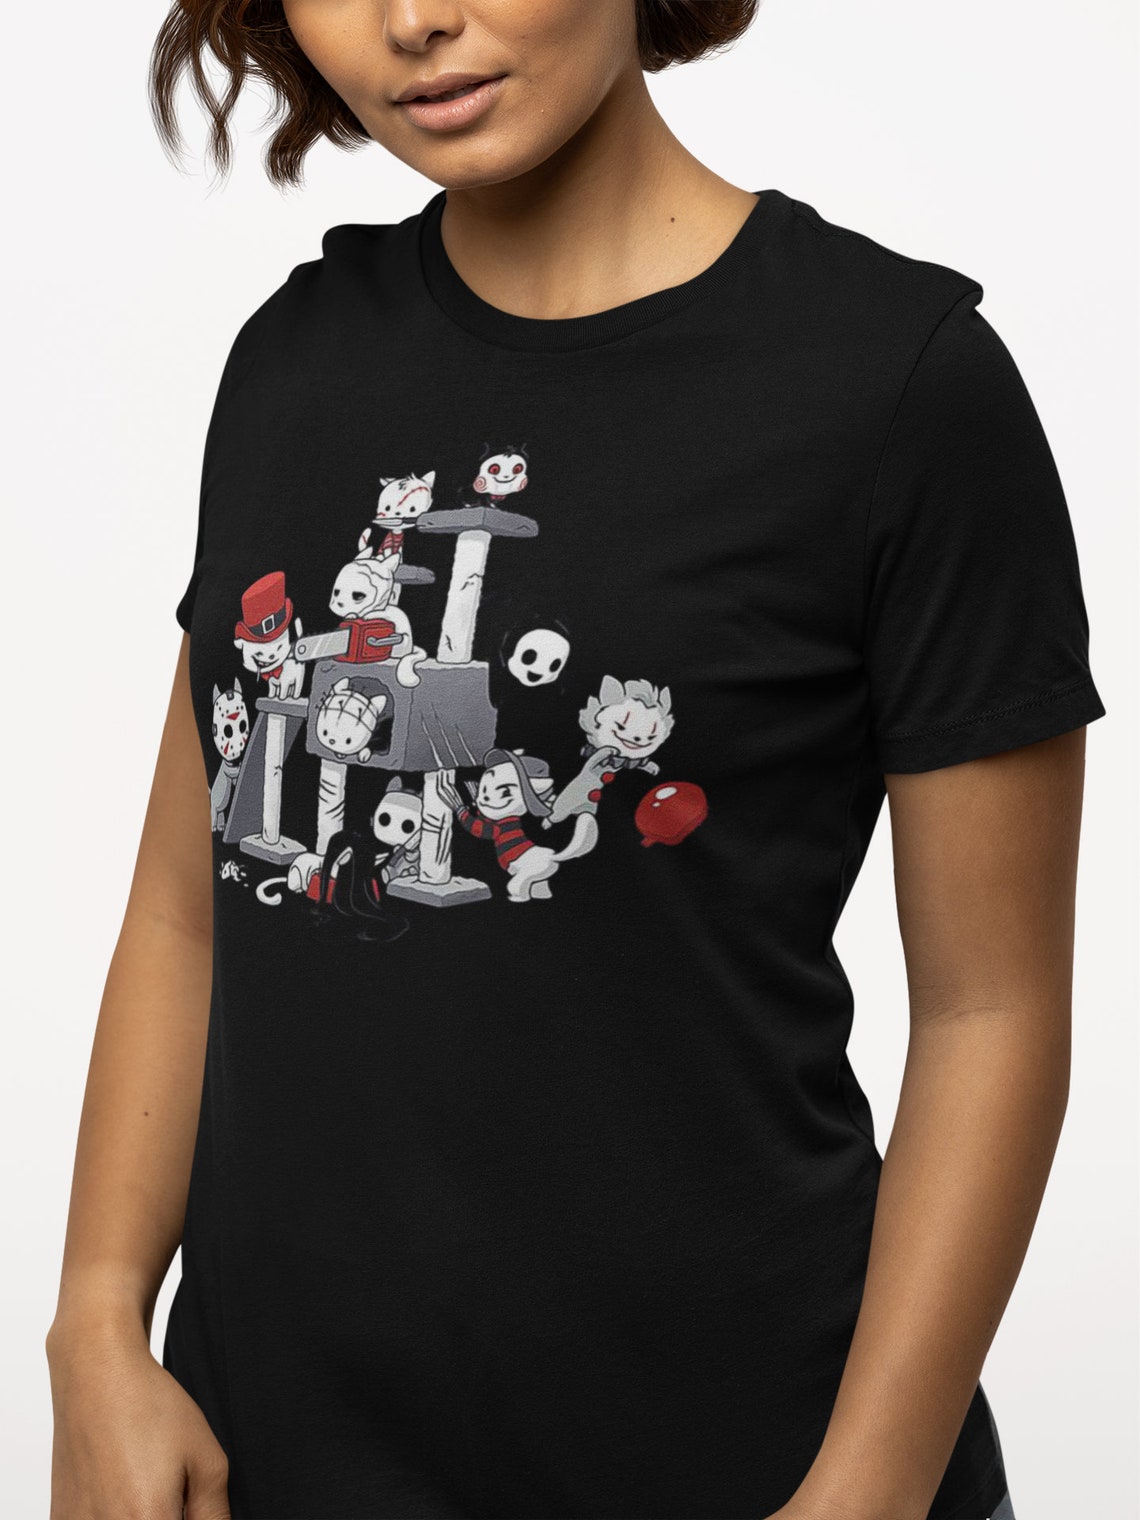 Halloween Horror Cats, Halloween Cat Shirt, Cat Mom, Funny Cat Shirt, Gift for Cat Mom, Animal Lovers, Cute Halloween Shirt, Horror Cats